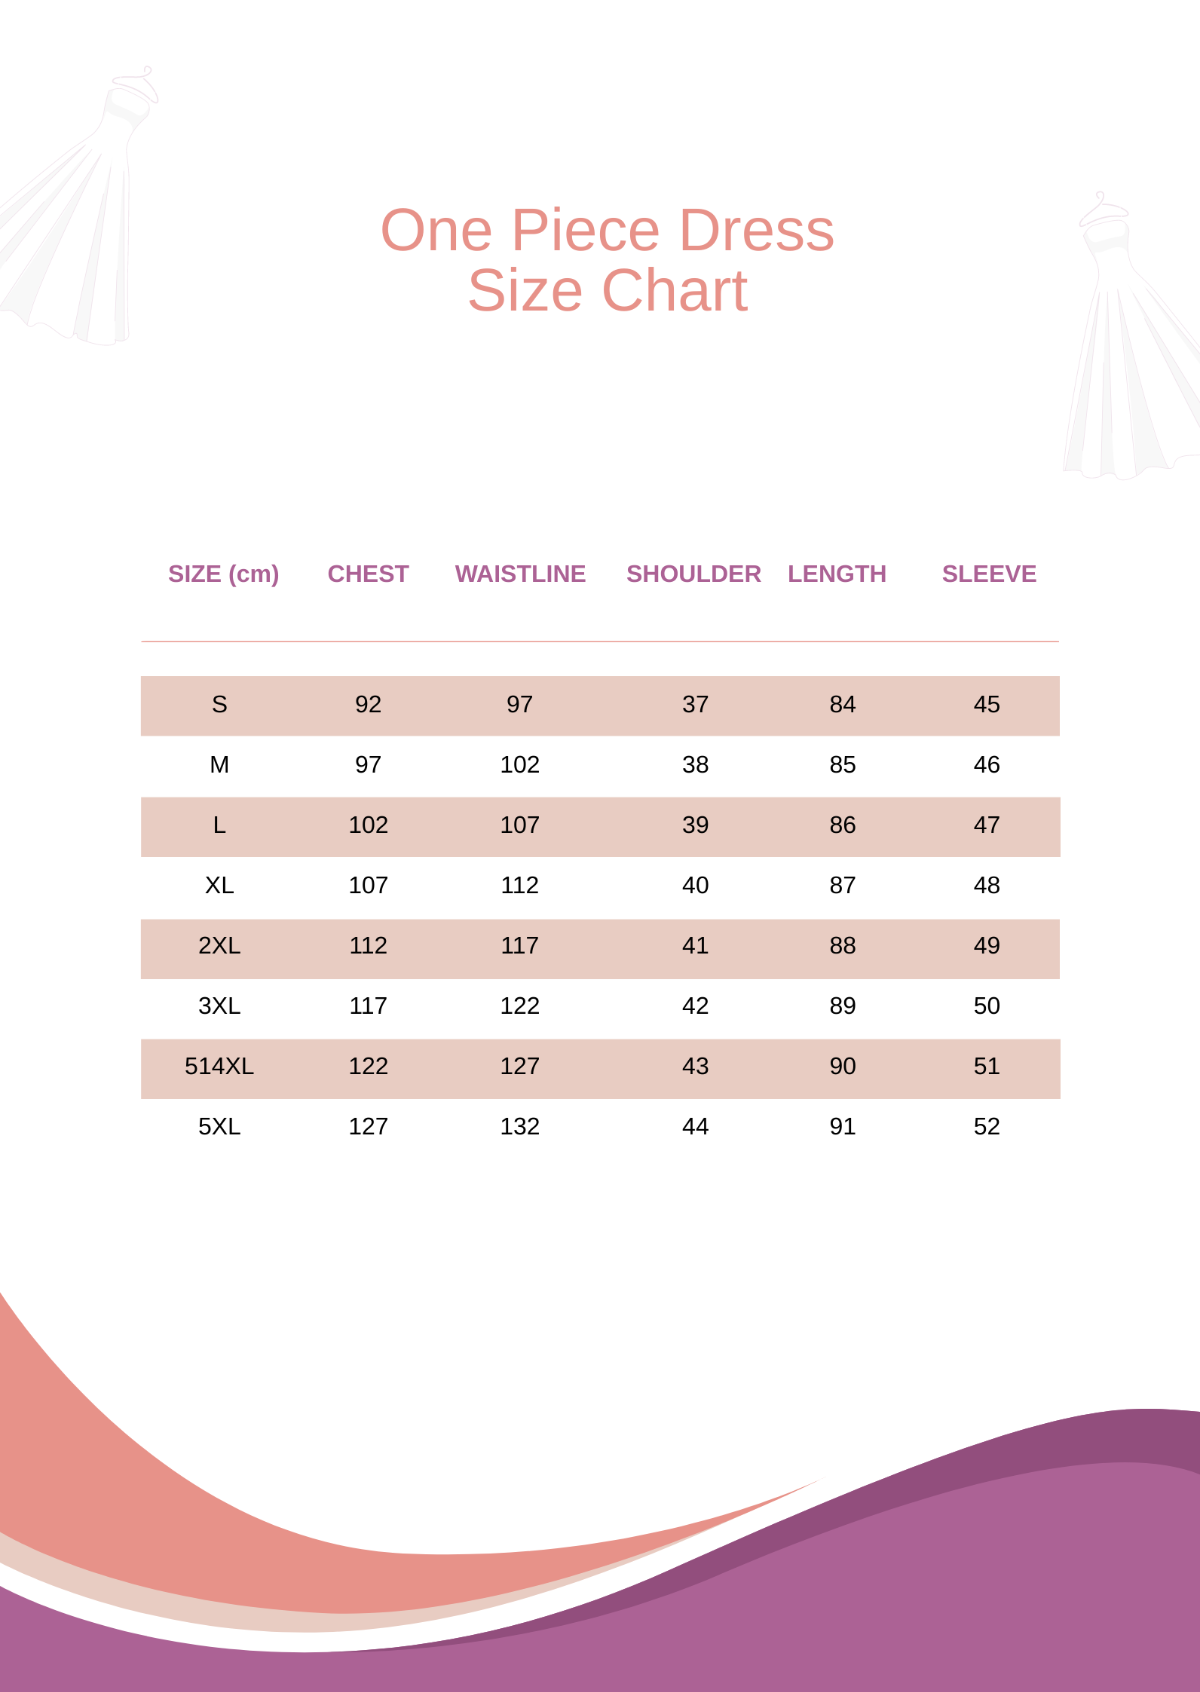 Free One Piece Dress Size Chart Template